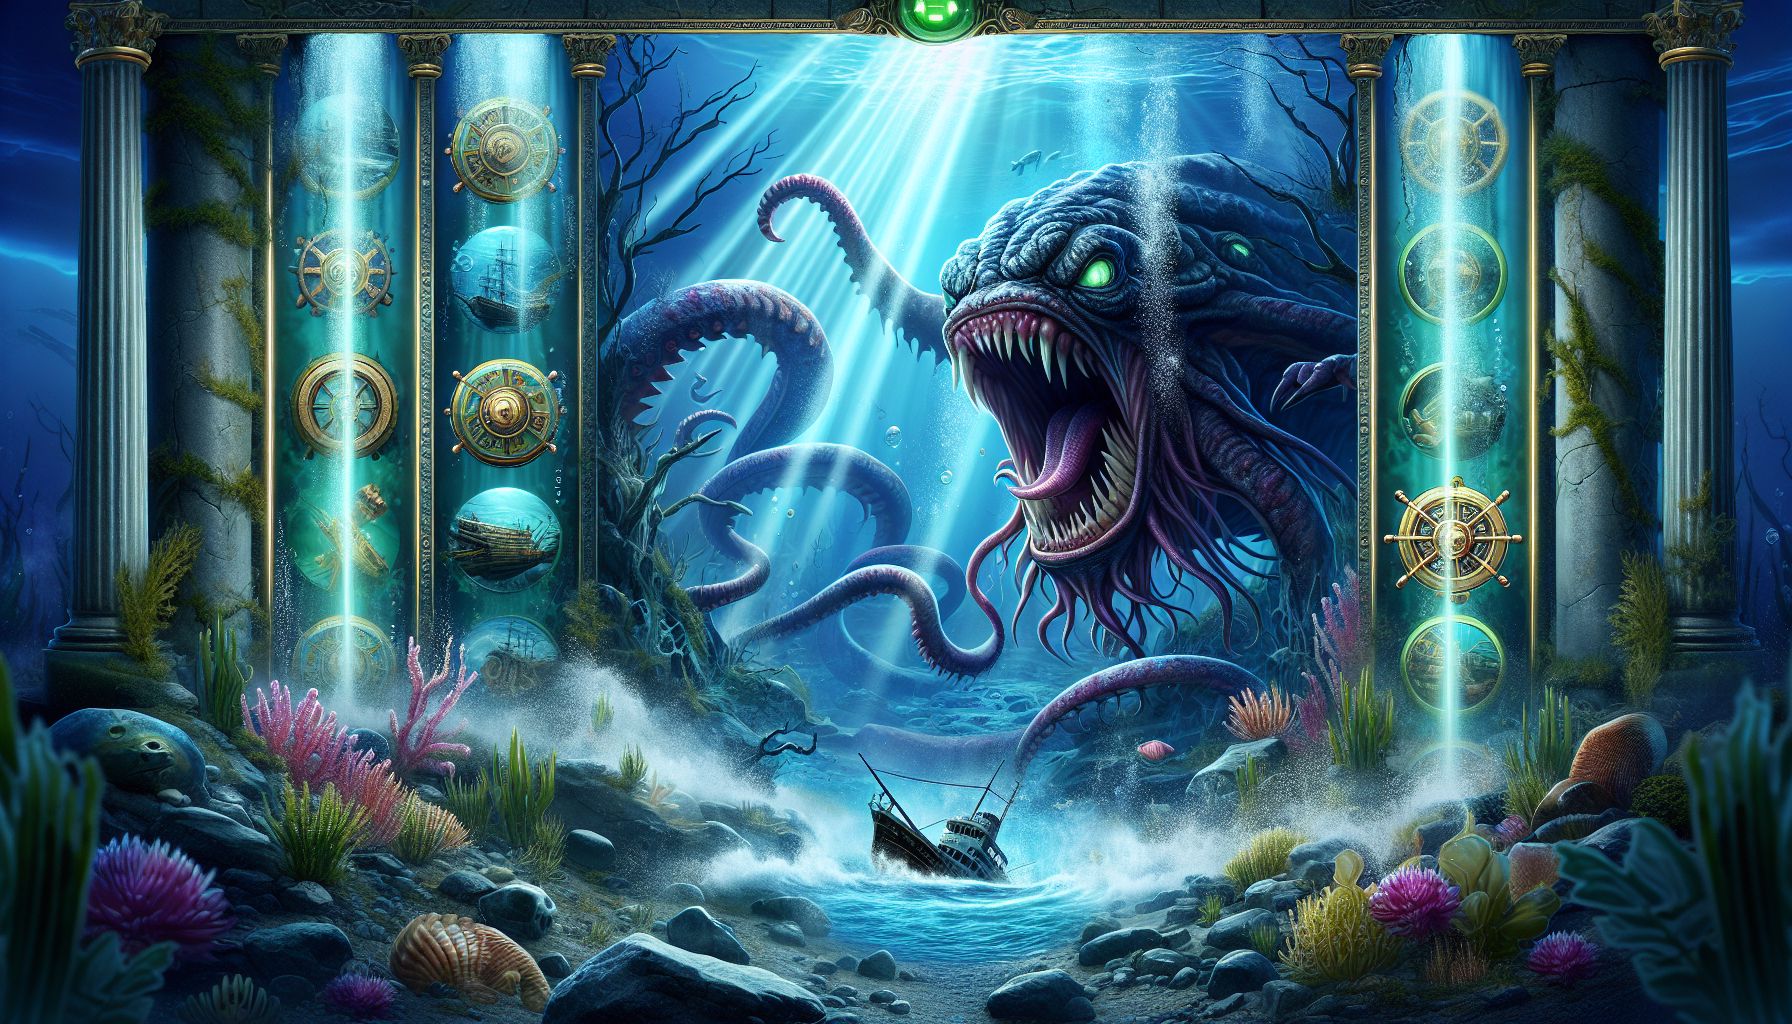 Release the Kraken: Misteri Keajaiban Bawah Air